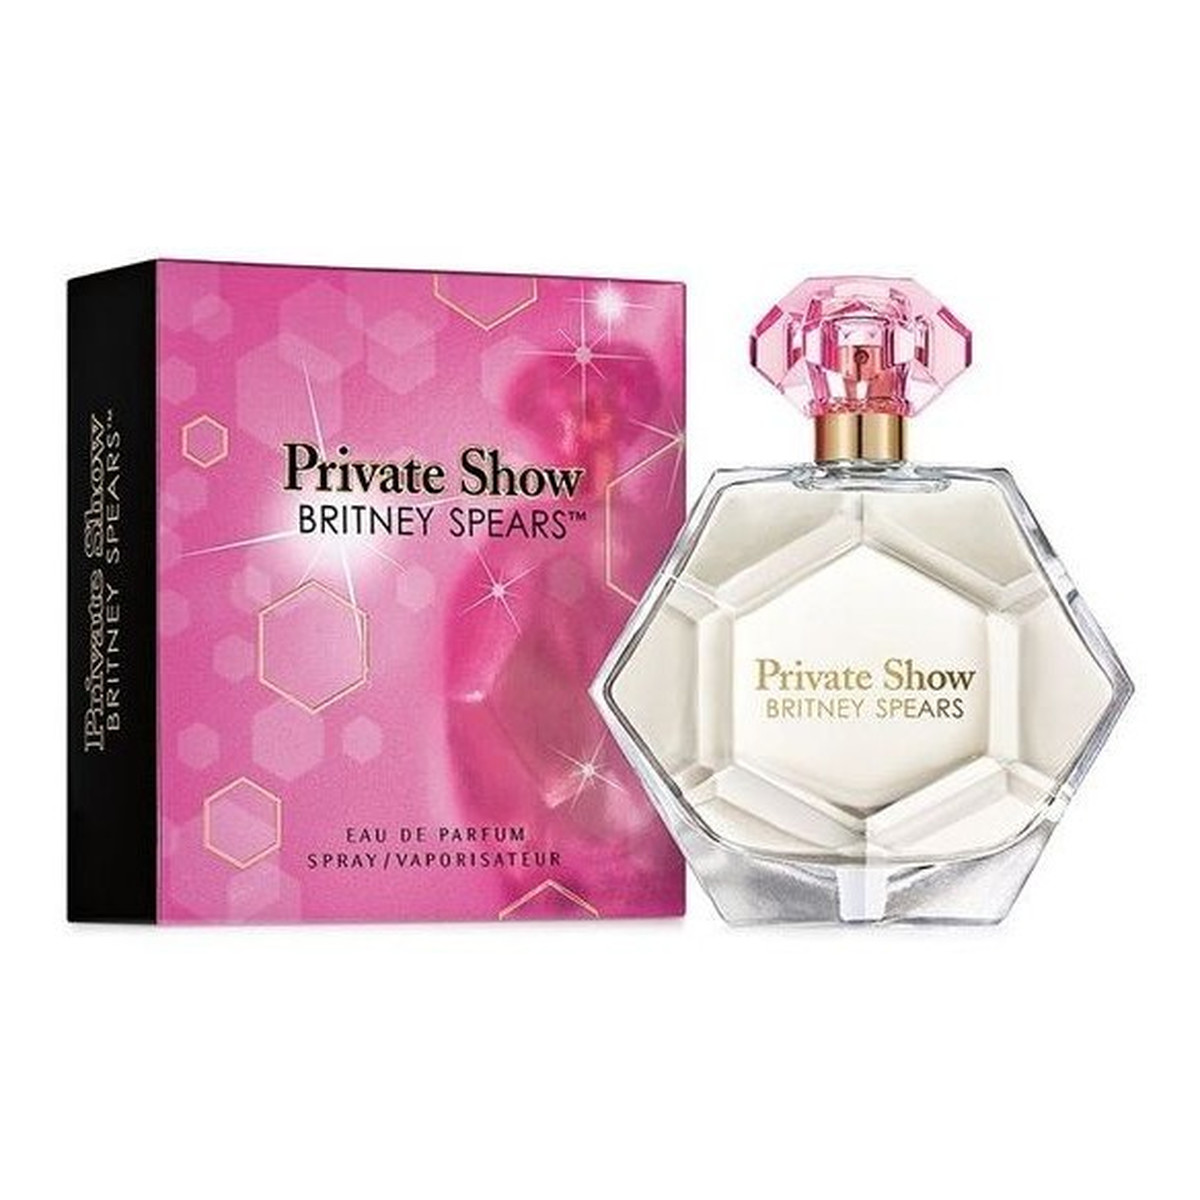 Britney Spears Private Show Eau De Parfum Spray Woda Perfumowana 50ml